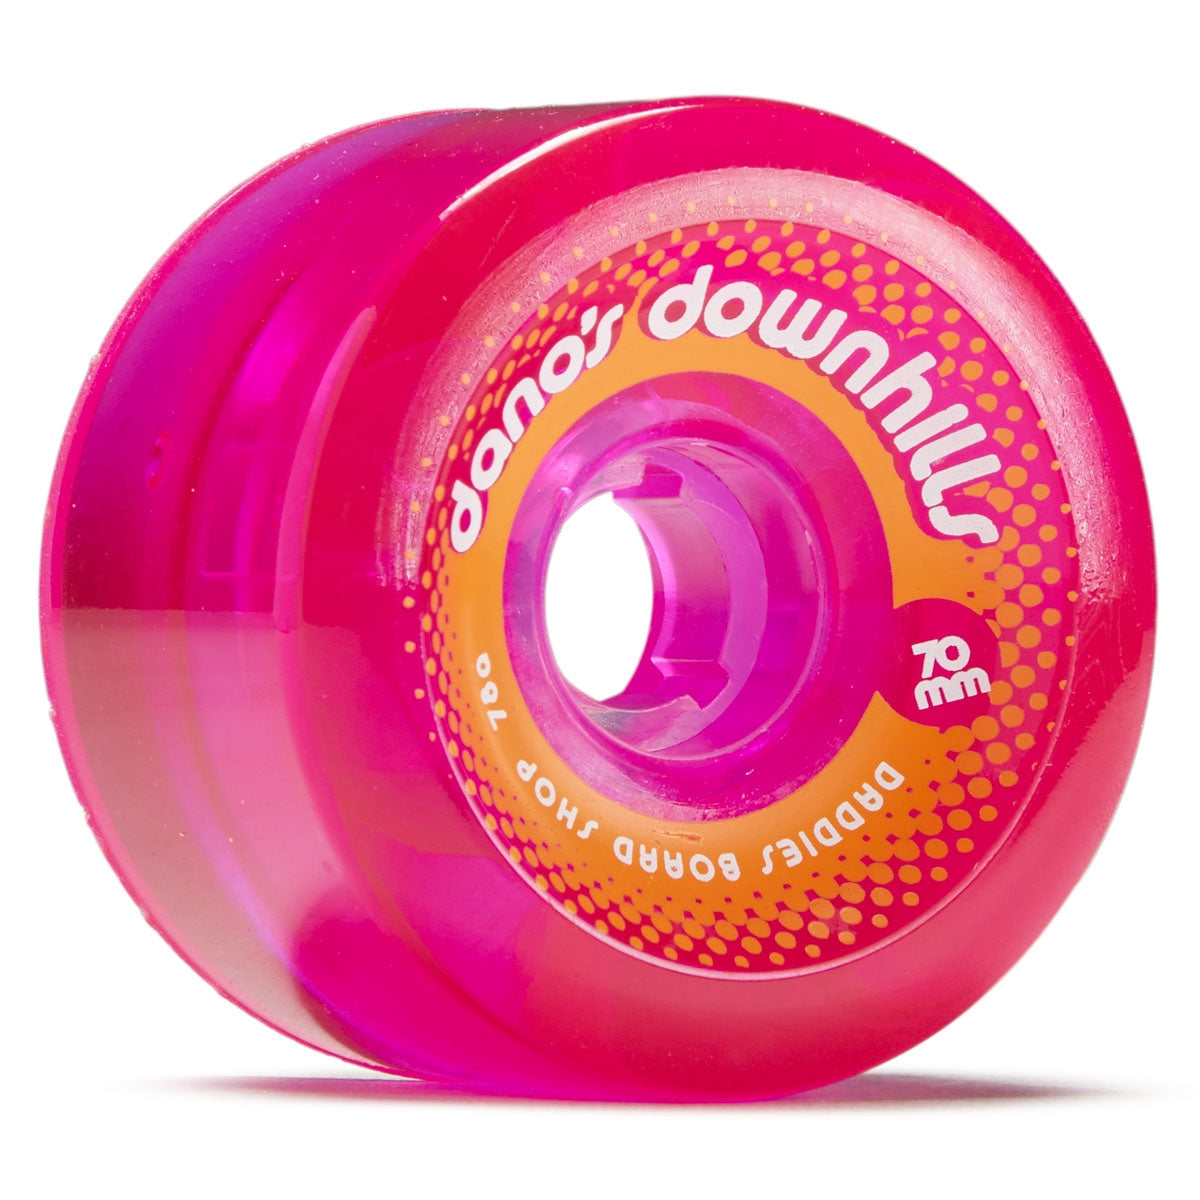 Dano's Downhills Longboard Wheels 70mm - 78a Pink image 1